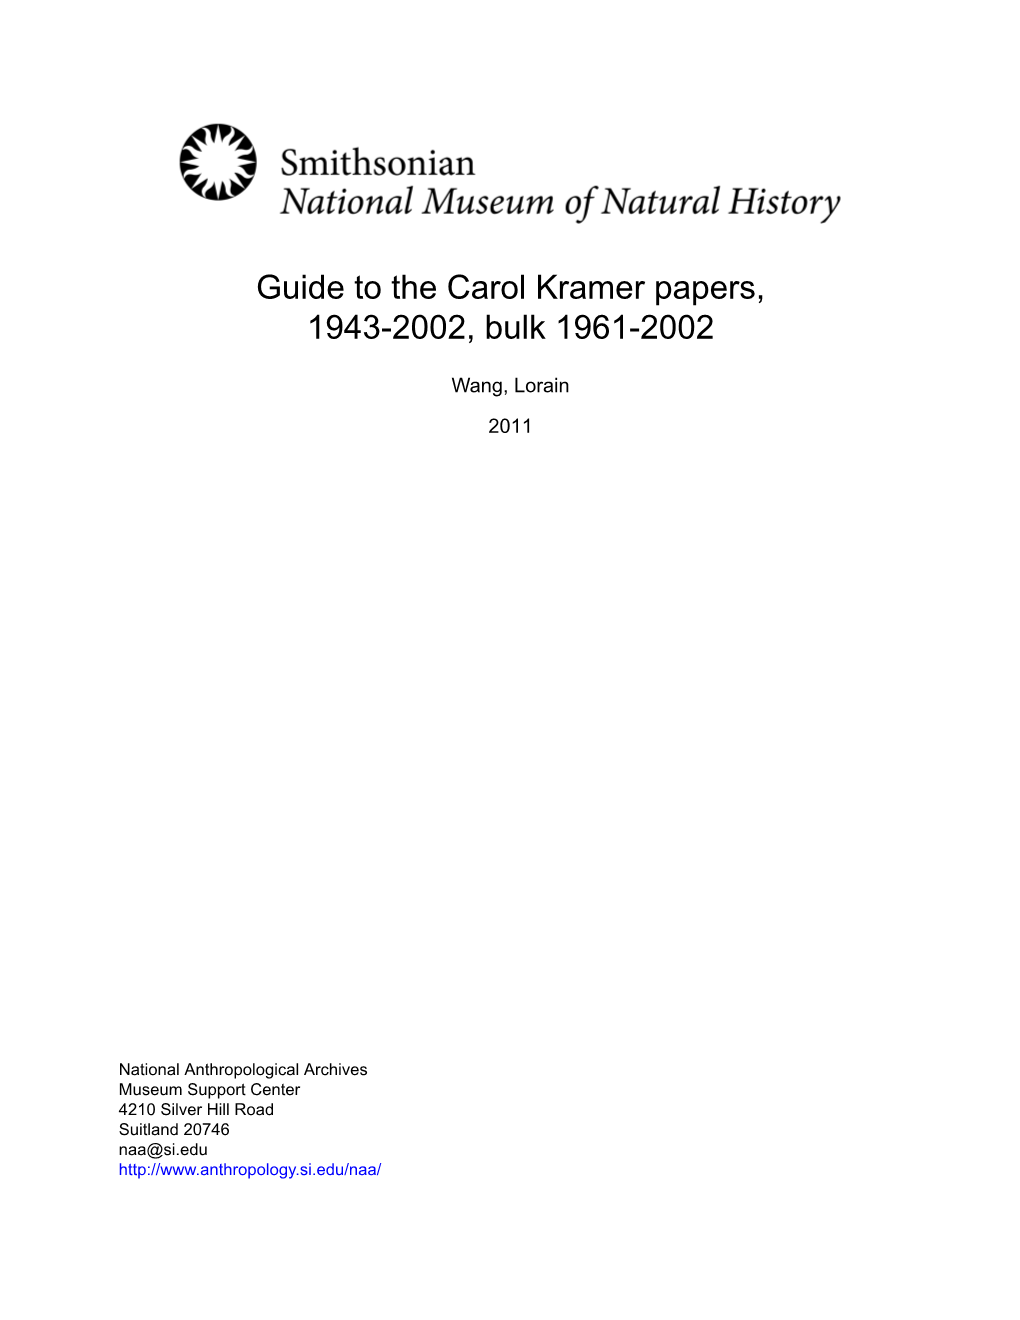 Guide to the Carol Kramer Papers, 1943-2002, Bulk 1961-2002